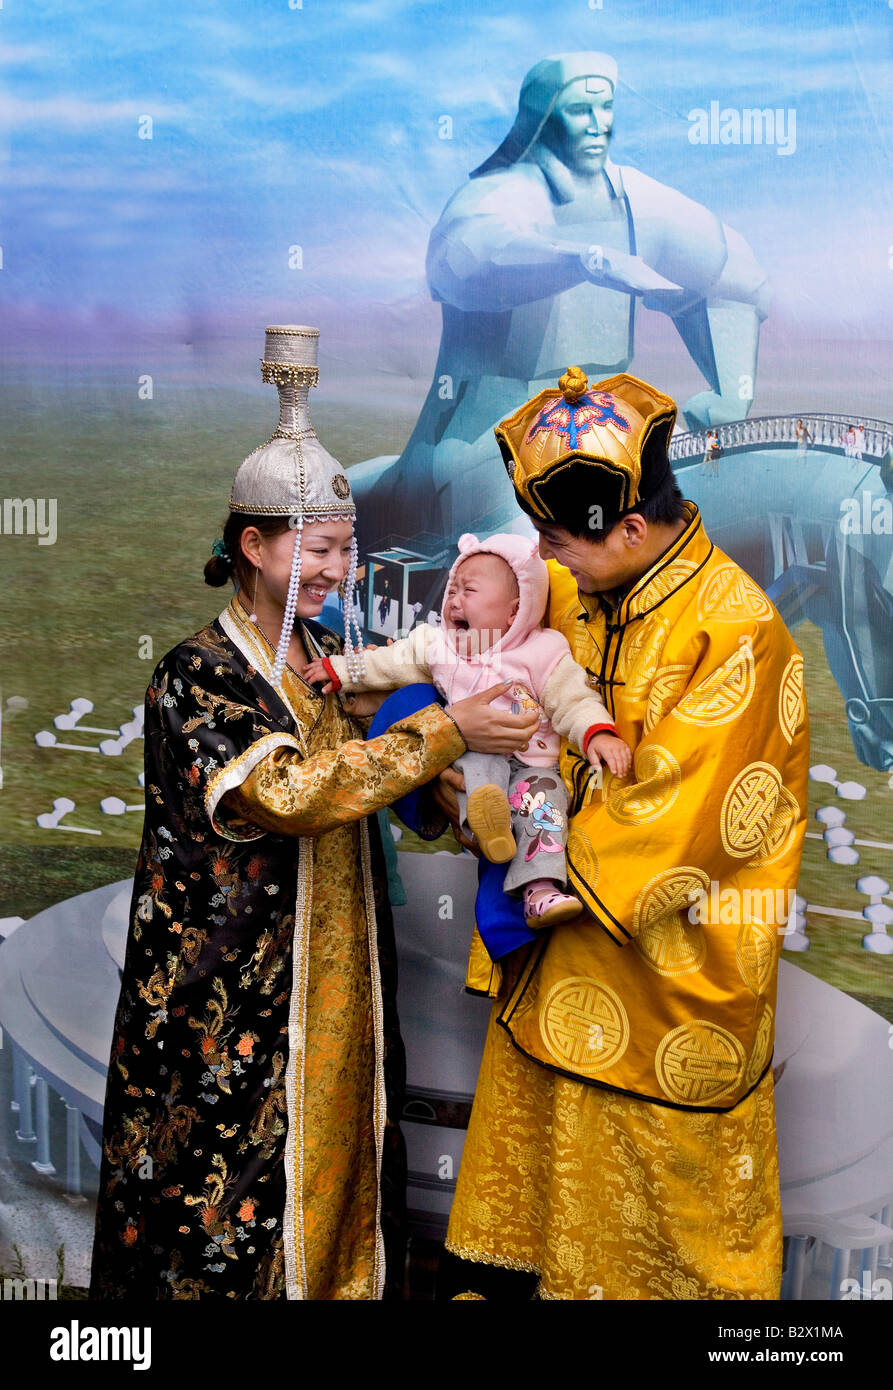 Woche das Naadam-Fest feiert das 800. Jubiläum oder der mongolischen Staat Dschingis Khan Photobooth Teilnehmer Kleid Stockfoto